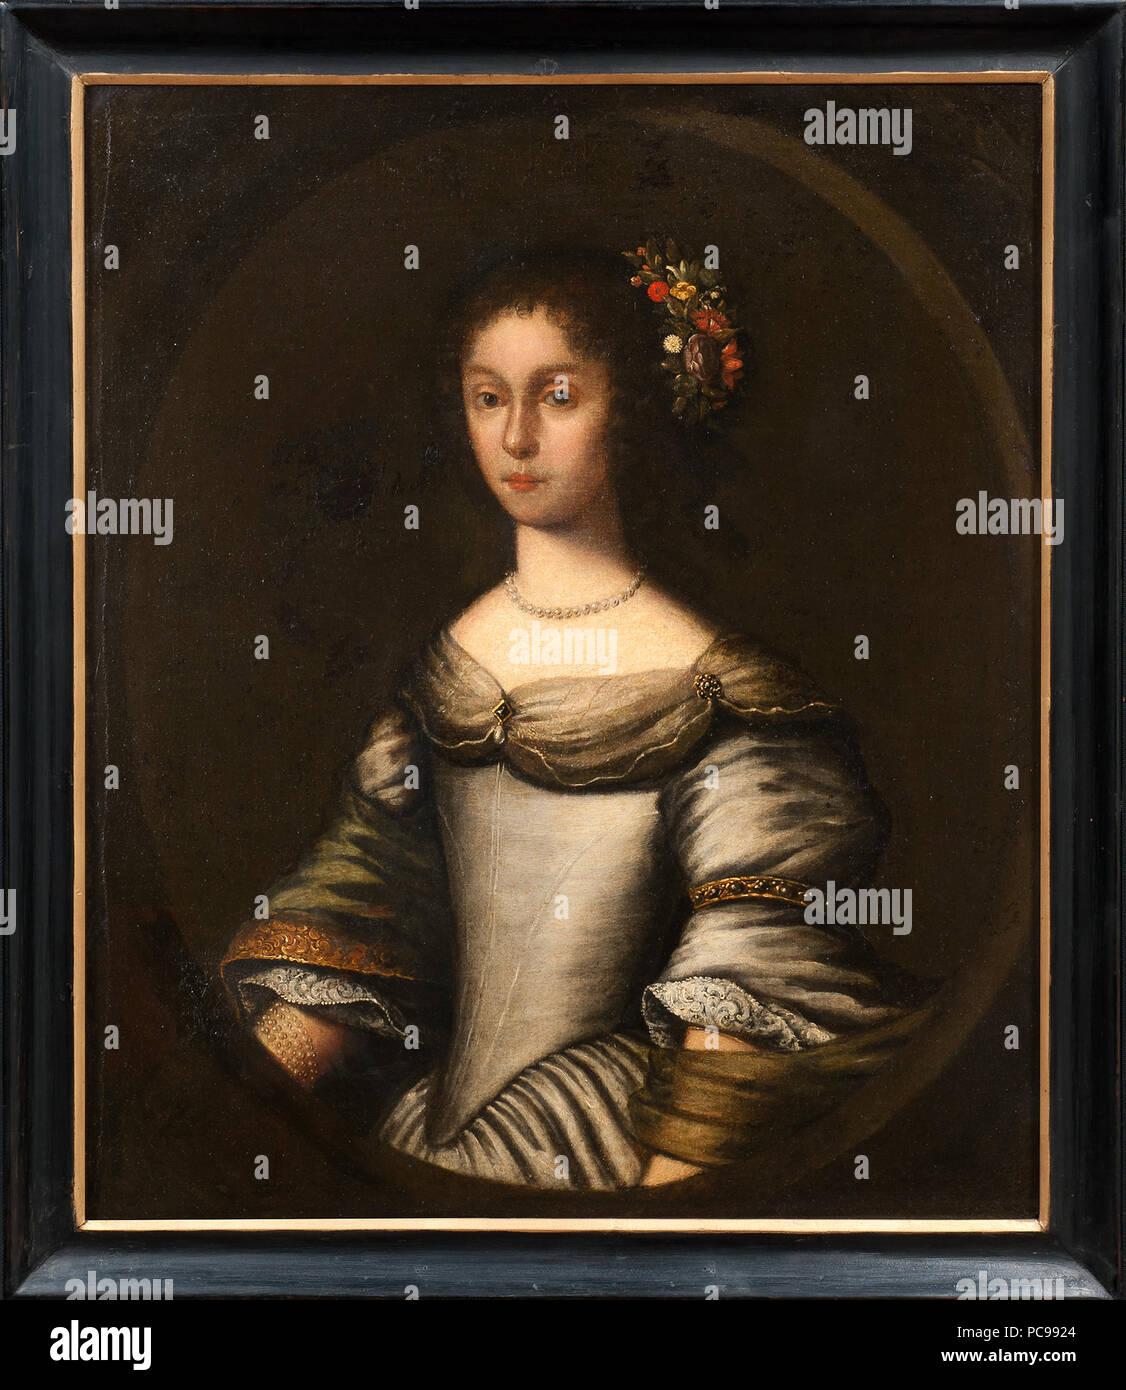 NM Grh2061 Elsa Cruus af Edeby, 1631-1716, gift med Krister Bonde 18 Elsa Cruus af Edeby, 1631-1716, gift med Krister Bonde - Nationalmuseum - 38923 Stock Photo